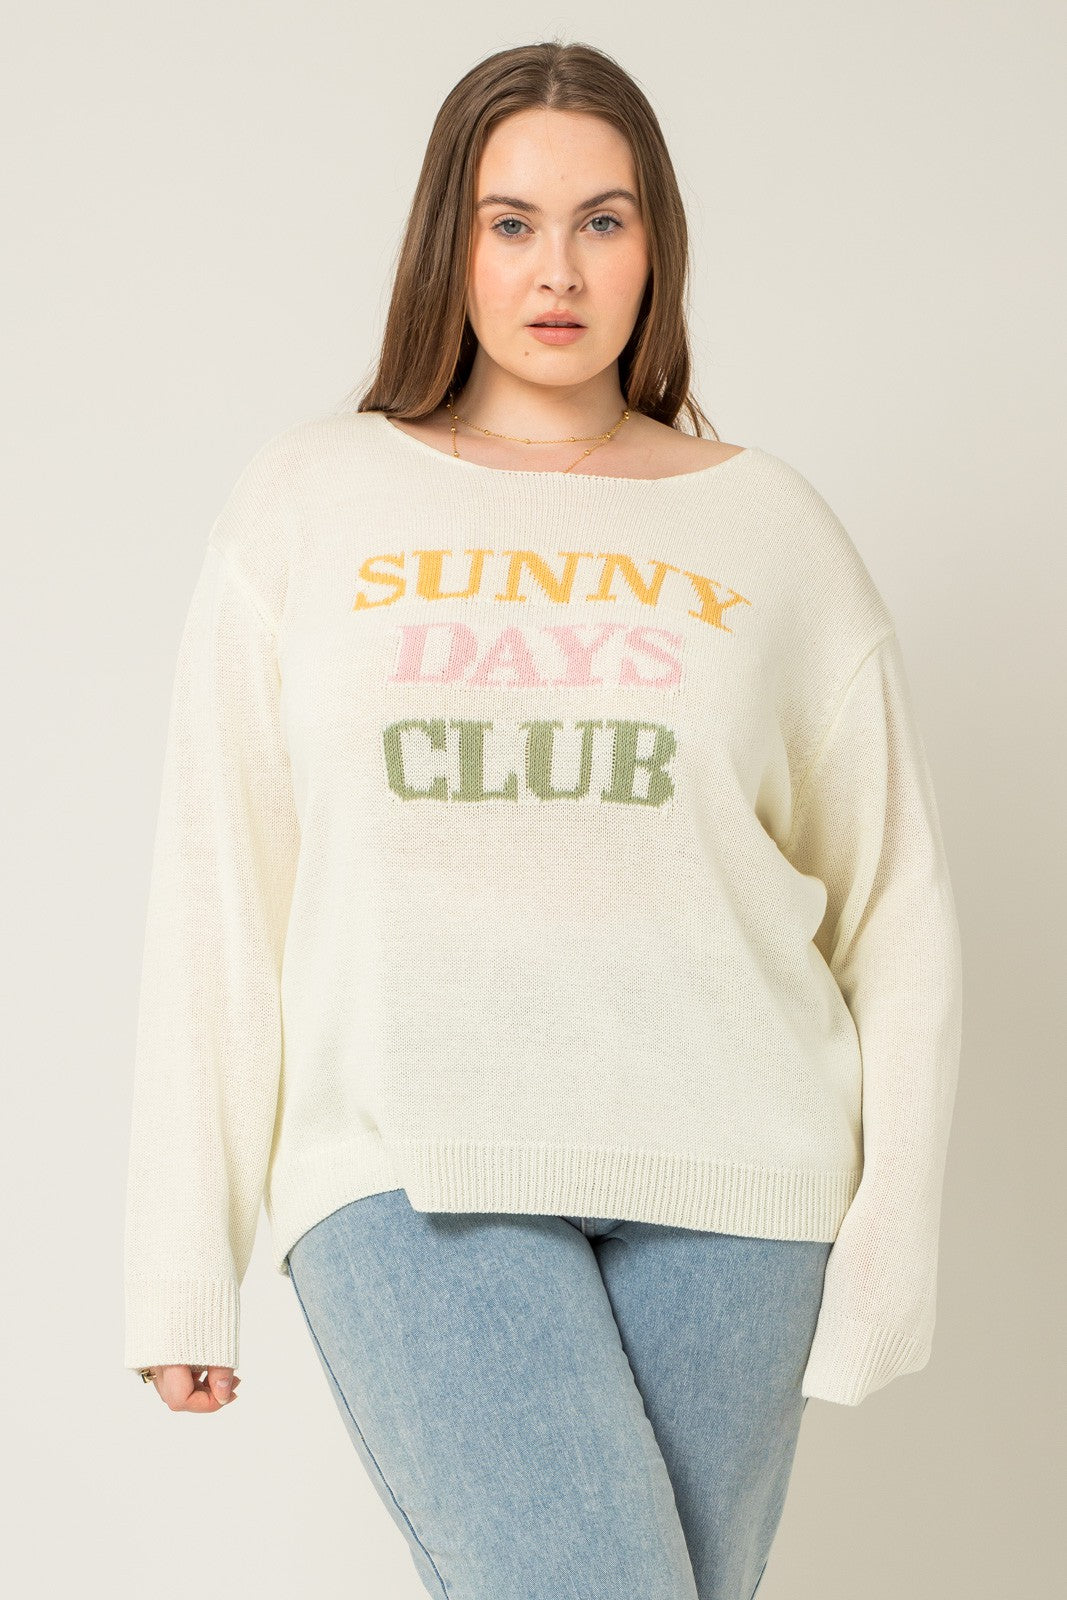 Sunny Days Club Sweater